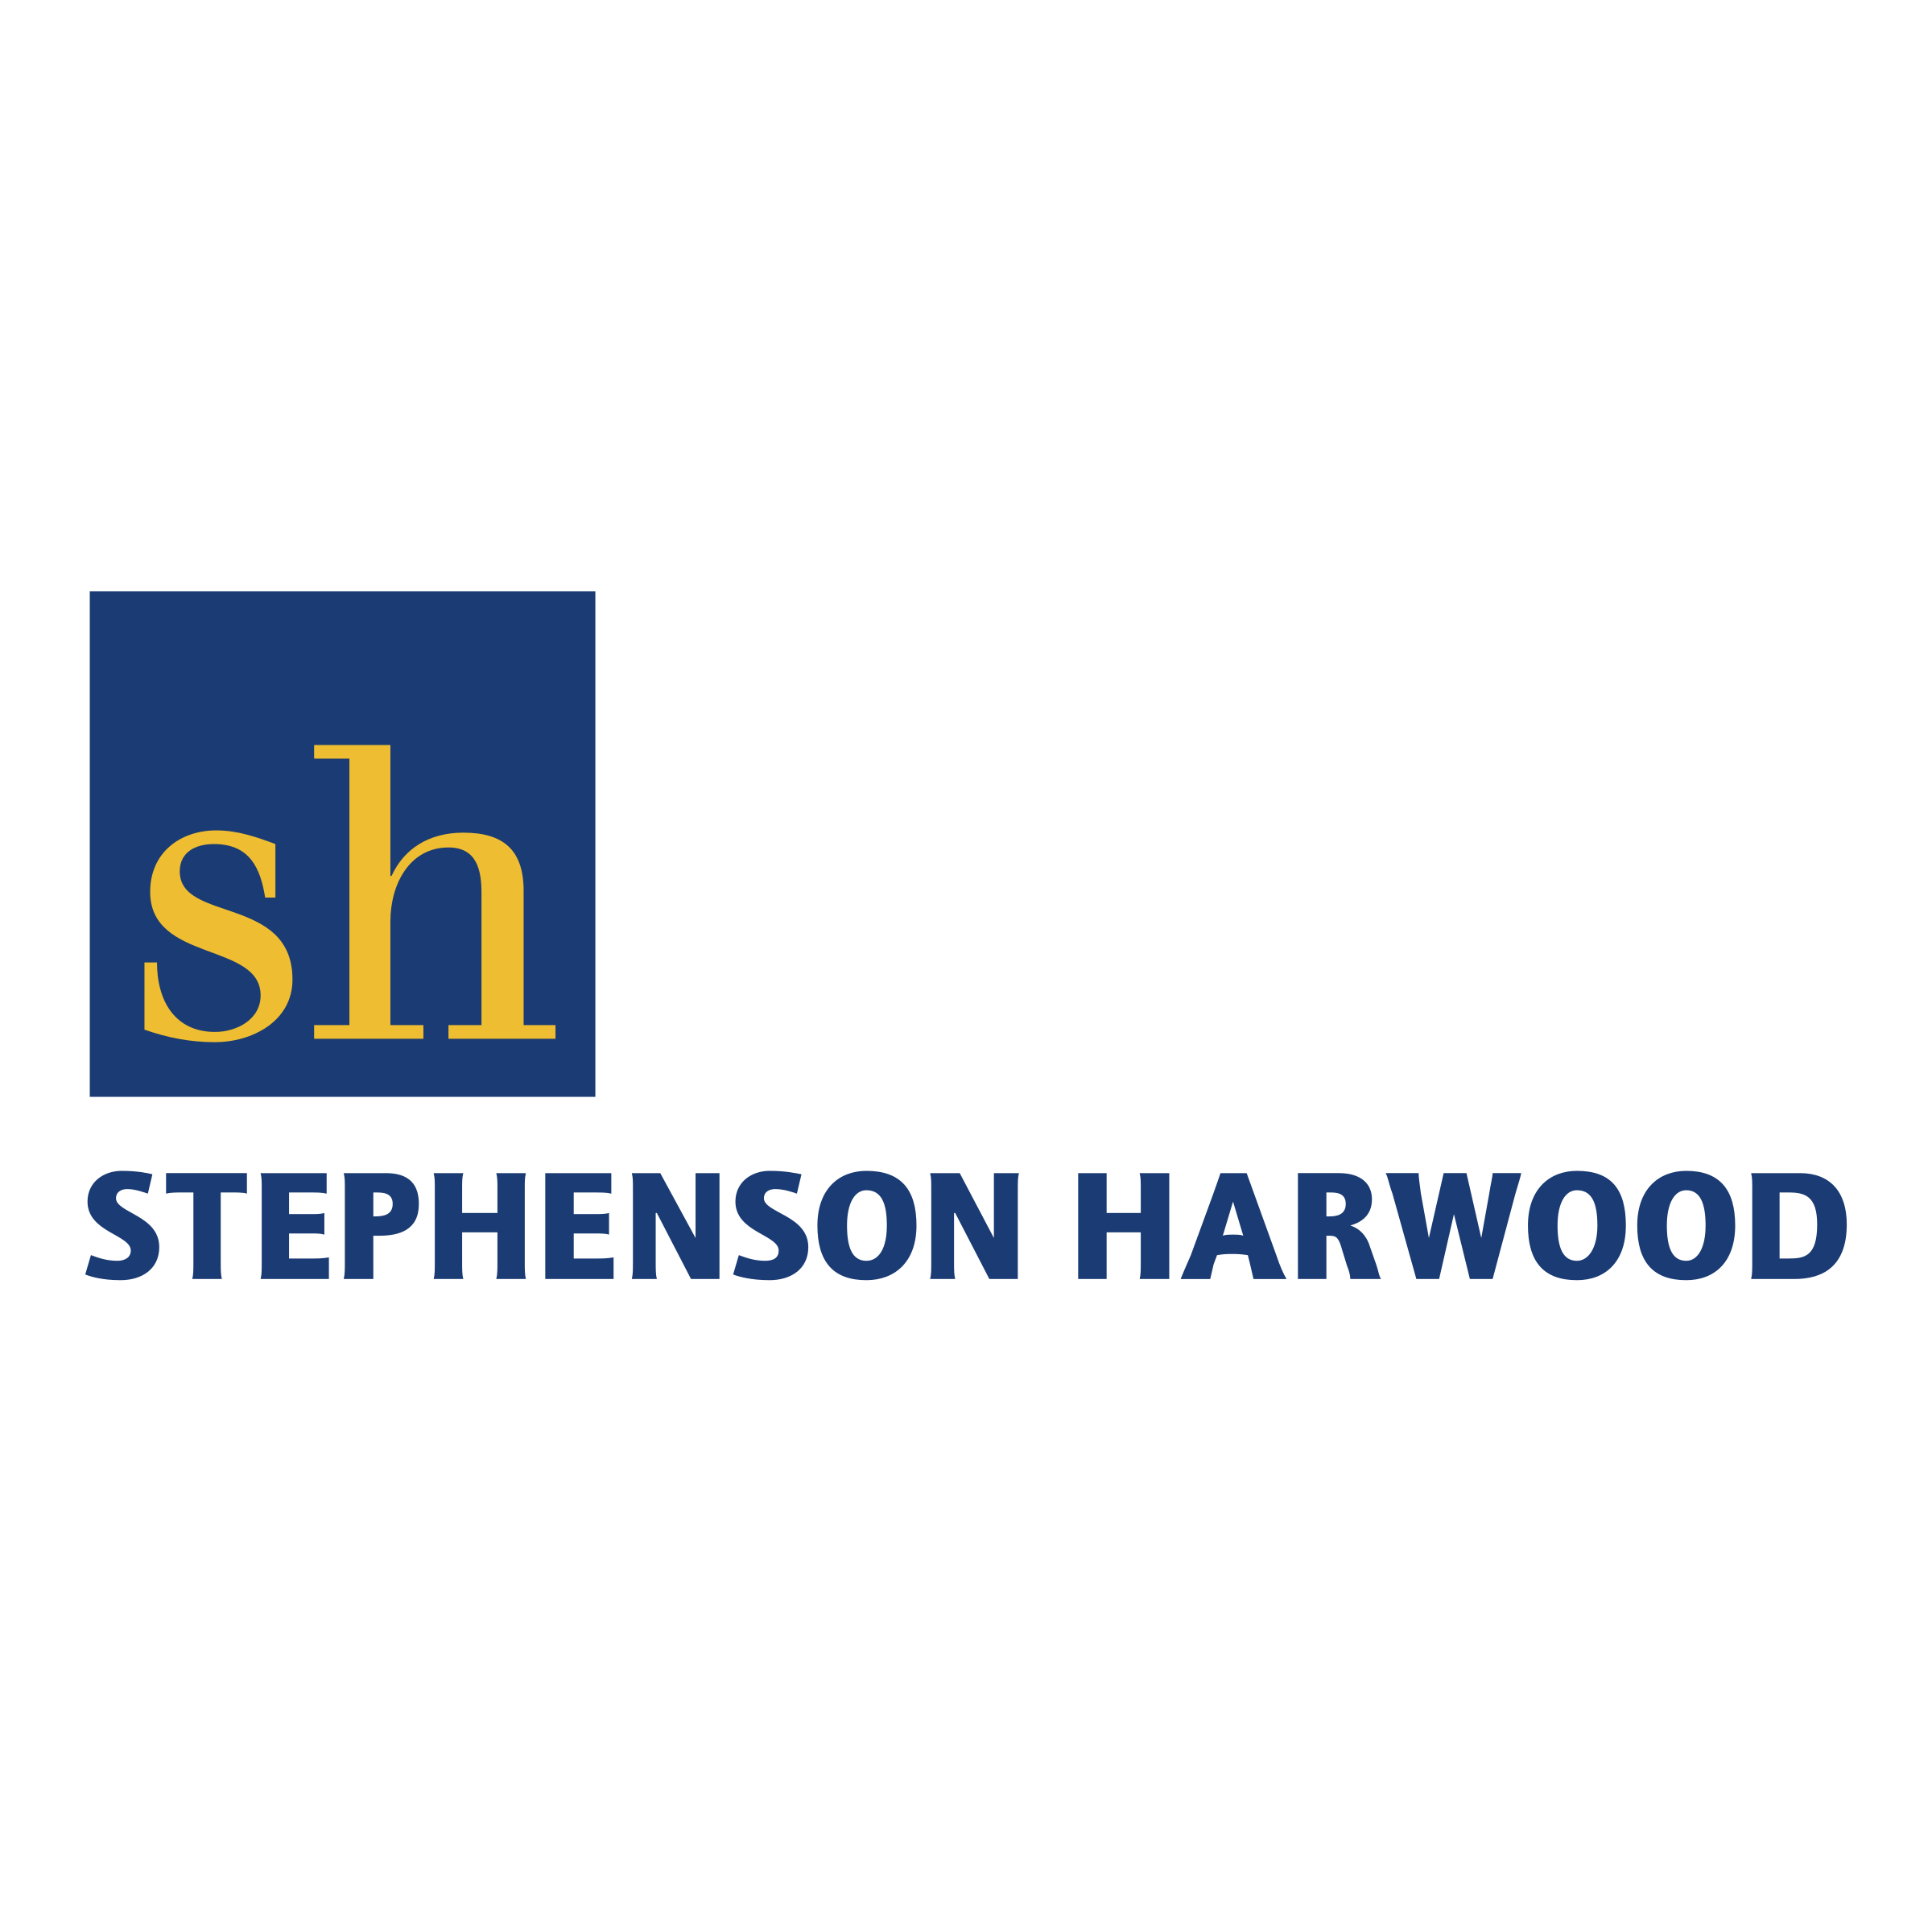 Stephenson Logo - Stephenson Harwood Logo PNG Transparent & SVG Vector - Freebie Supply